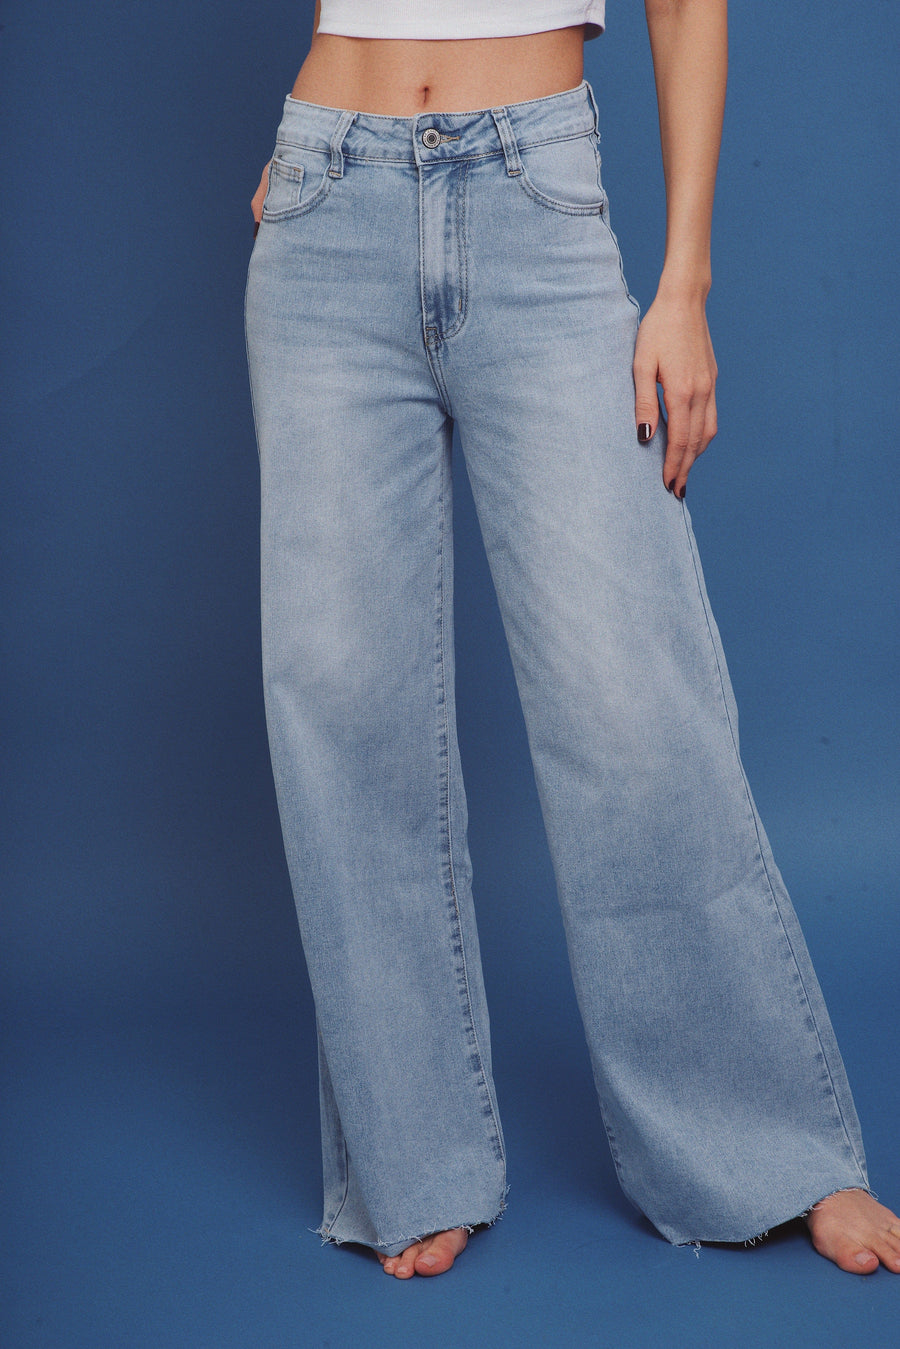 Hanks jeans